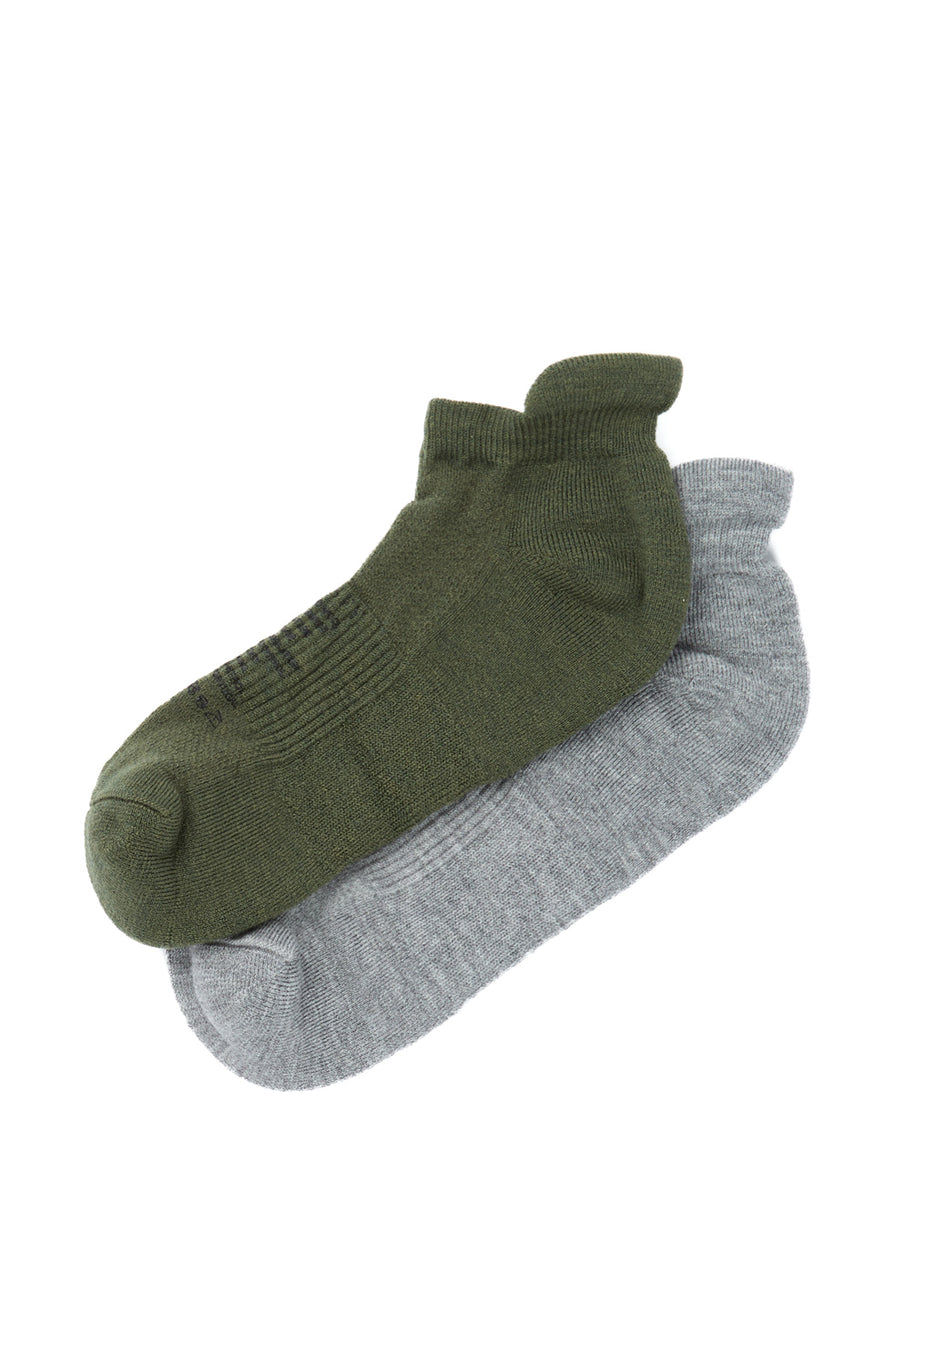 Satisfy Men's 2-Pack Merino Low Socks - Heather grey / Olive